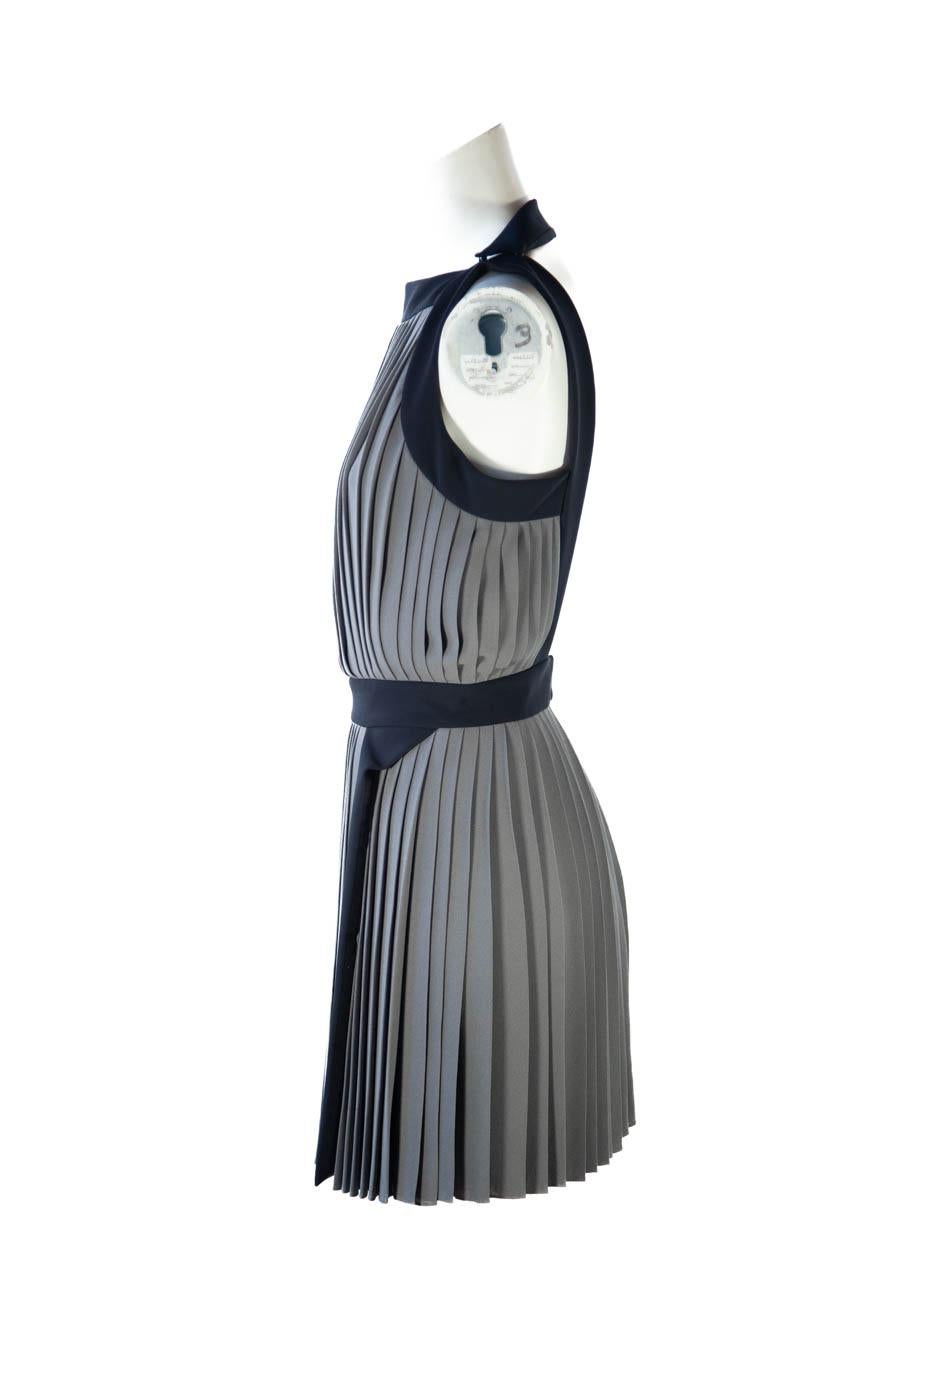 Balenciaga Paris, Pleated Grey and Black Trim, Open-Back Dress, 2000s

Excellent condition.

Size 36
